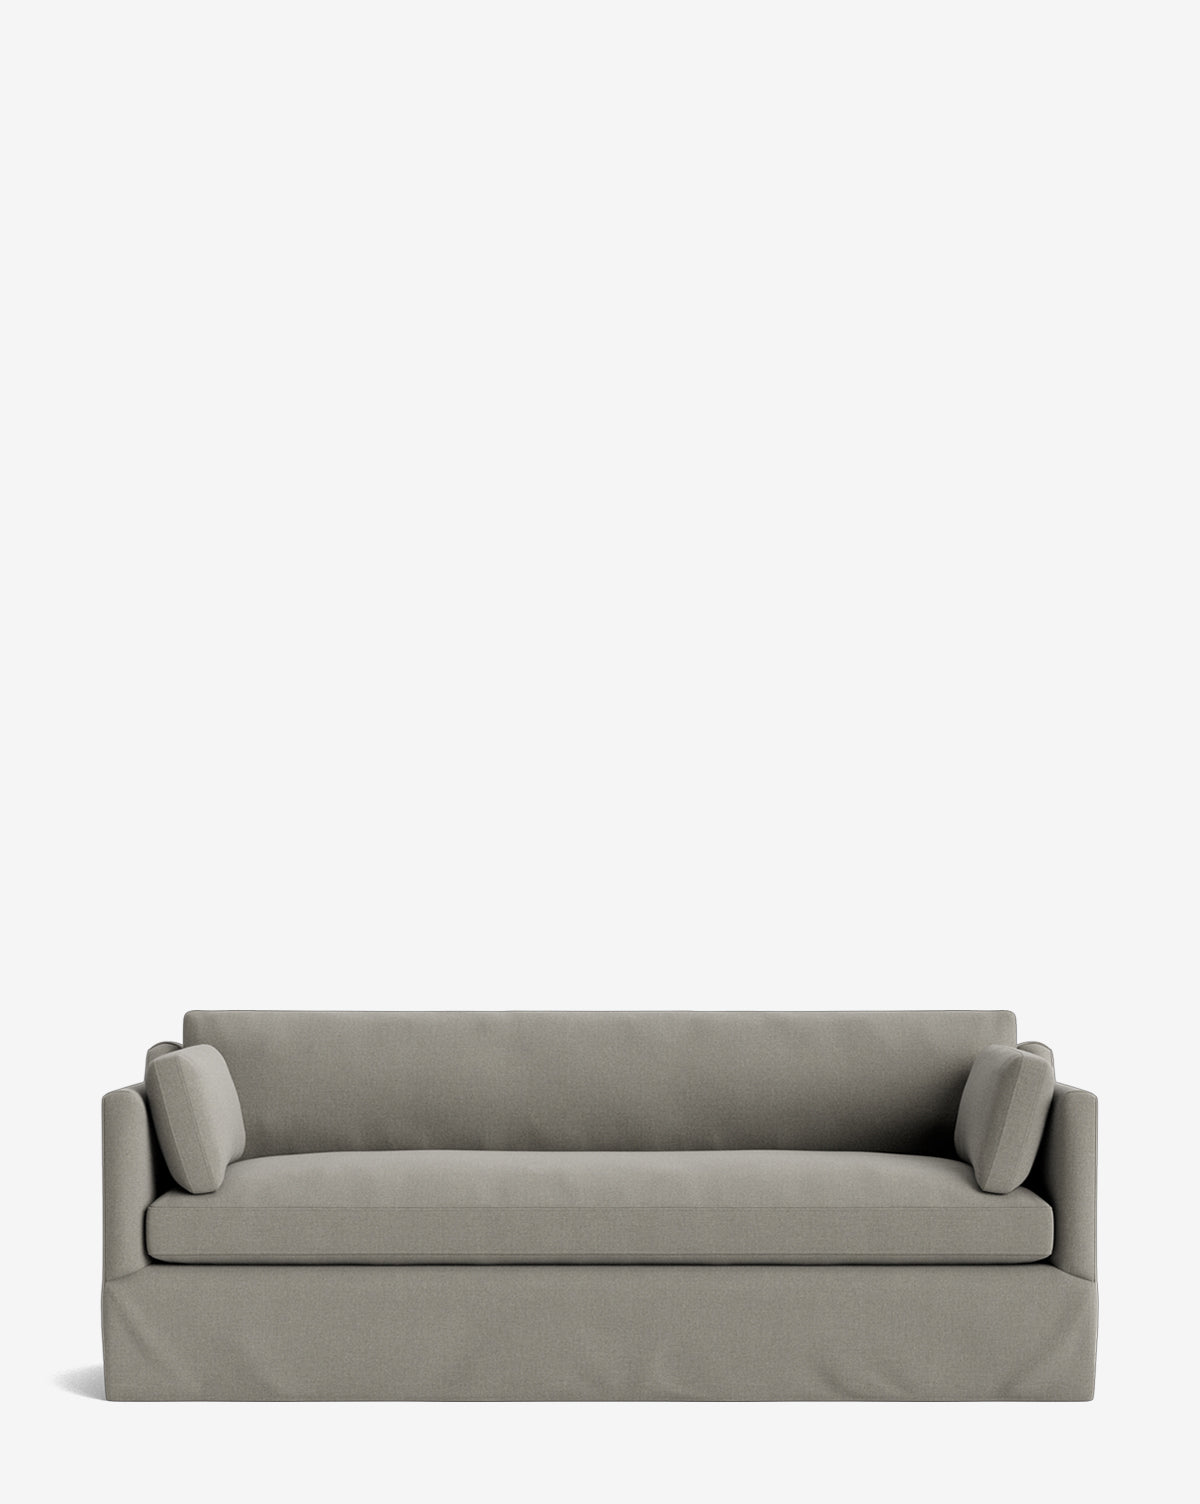 Rowe Fine Furniture, Haverford Slipcover Sofa